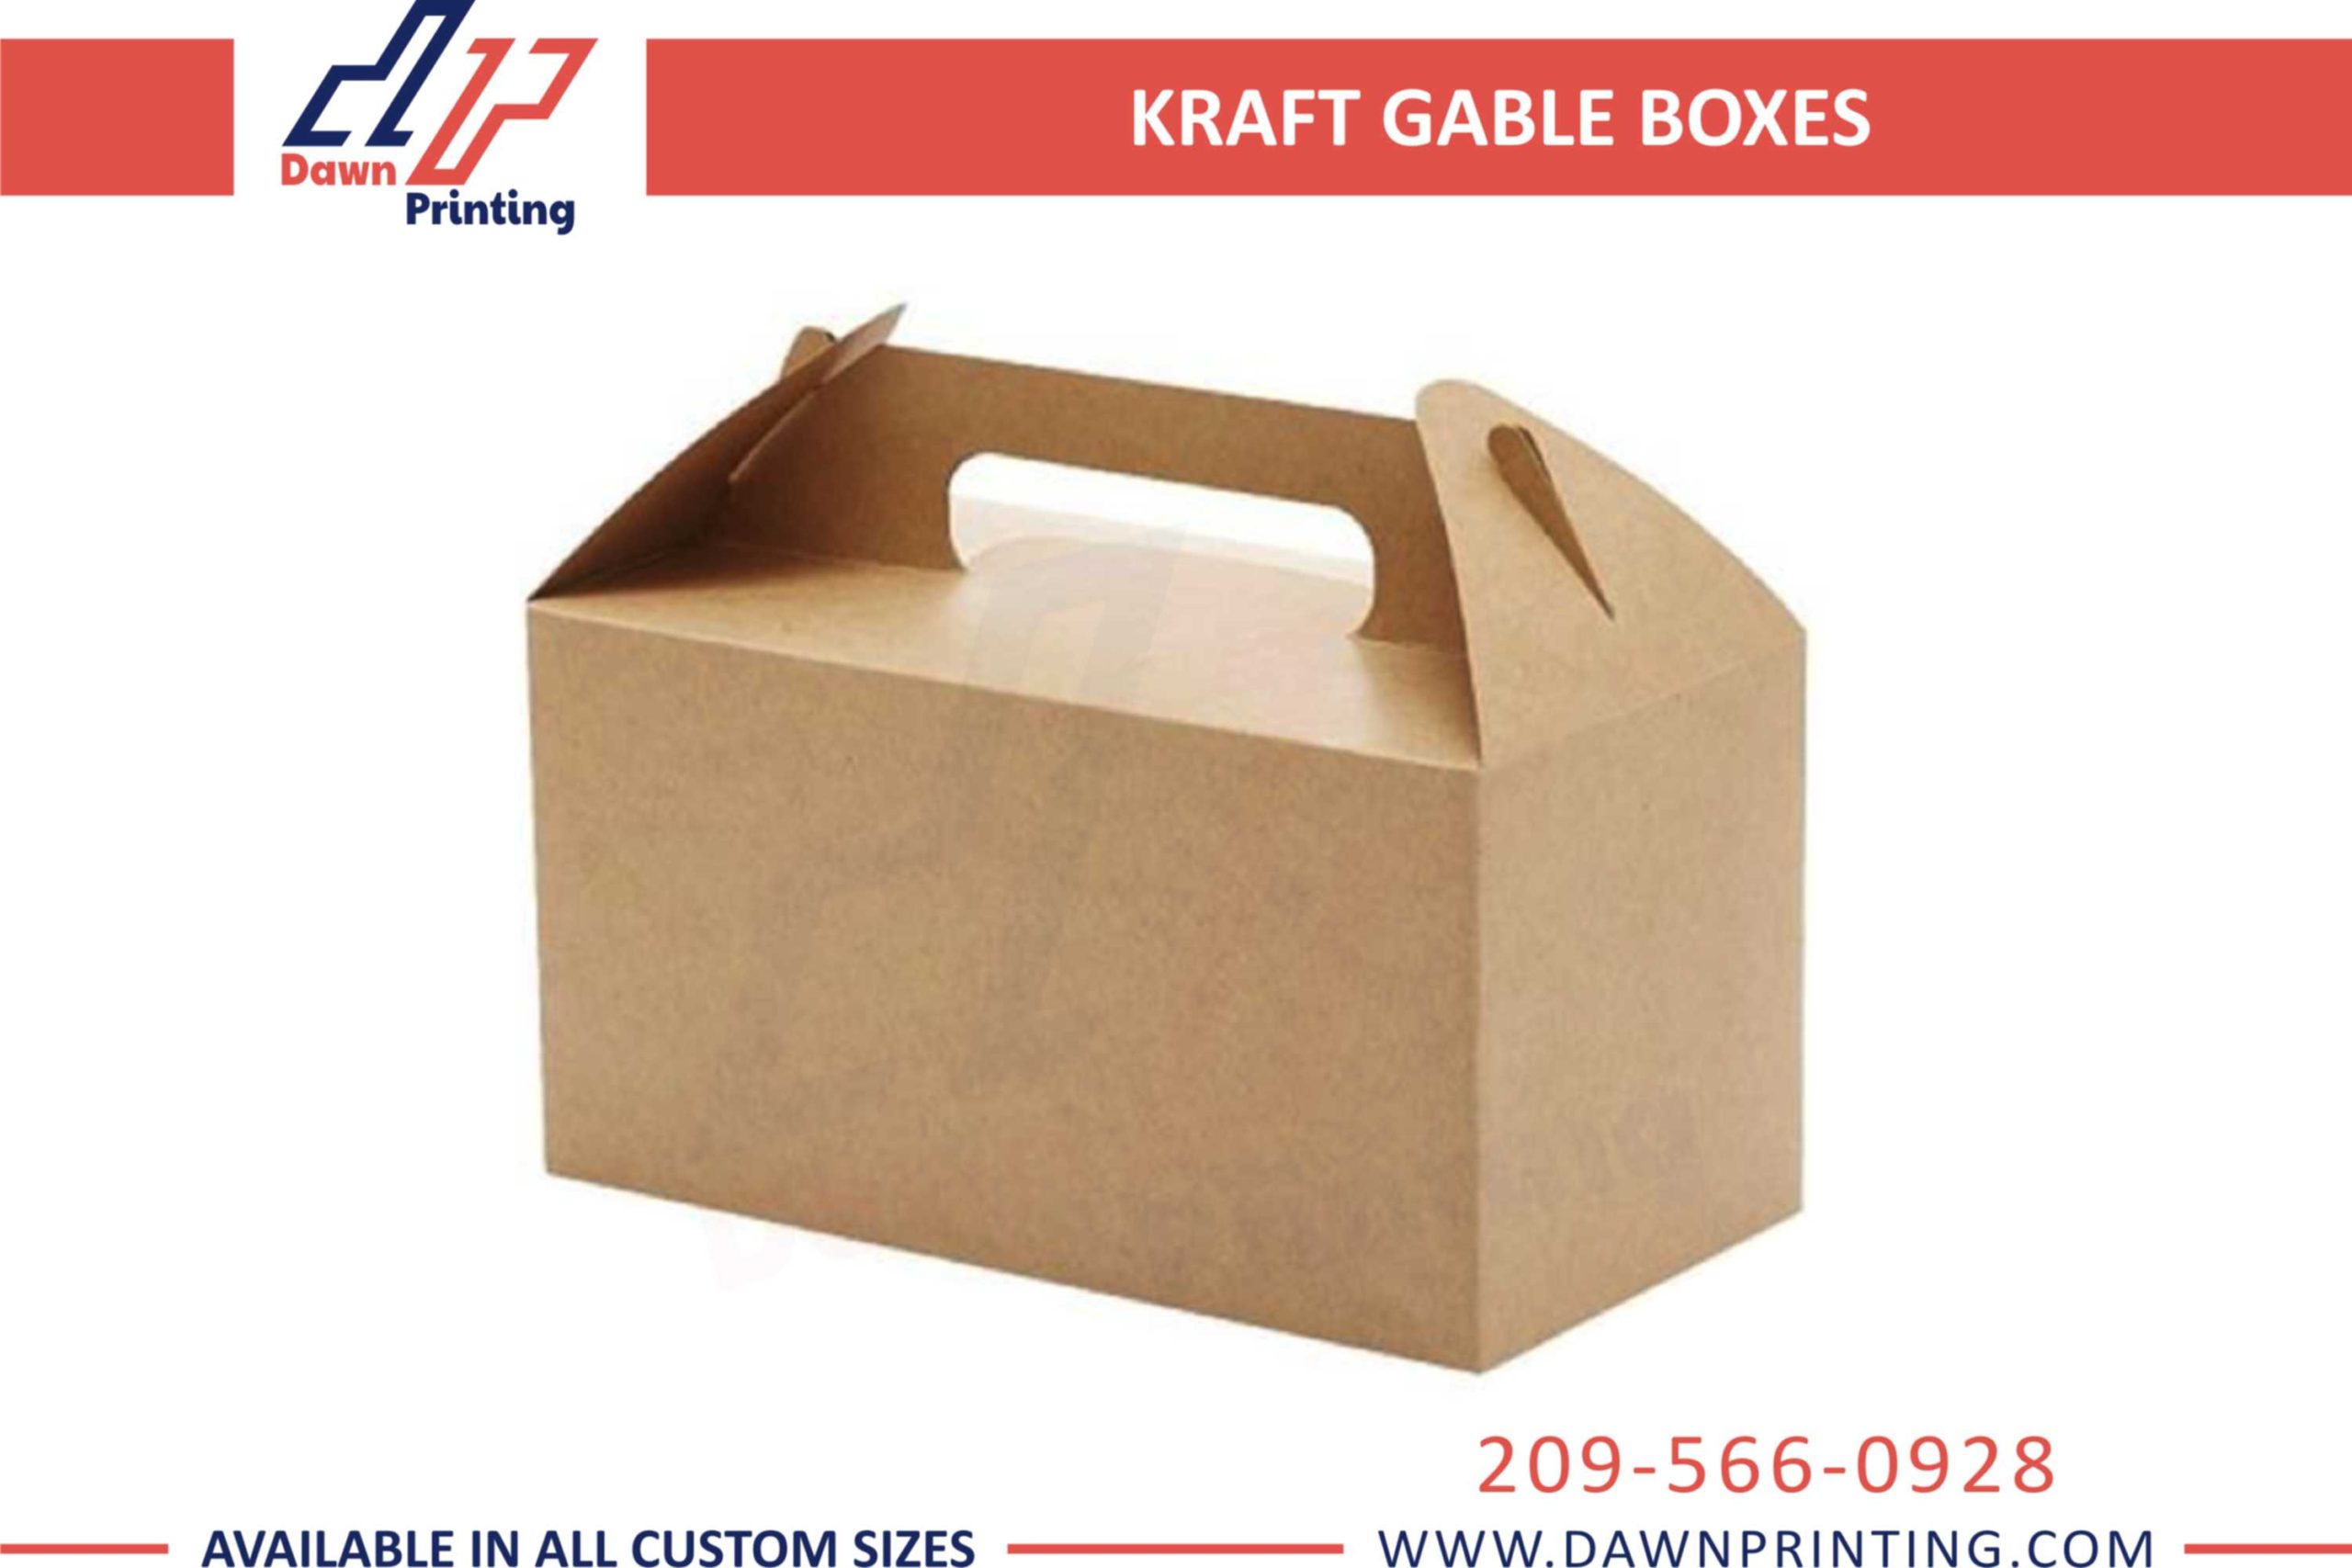 Wholesale Kraft Gable Boxes - Dawn Printing